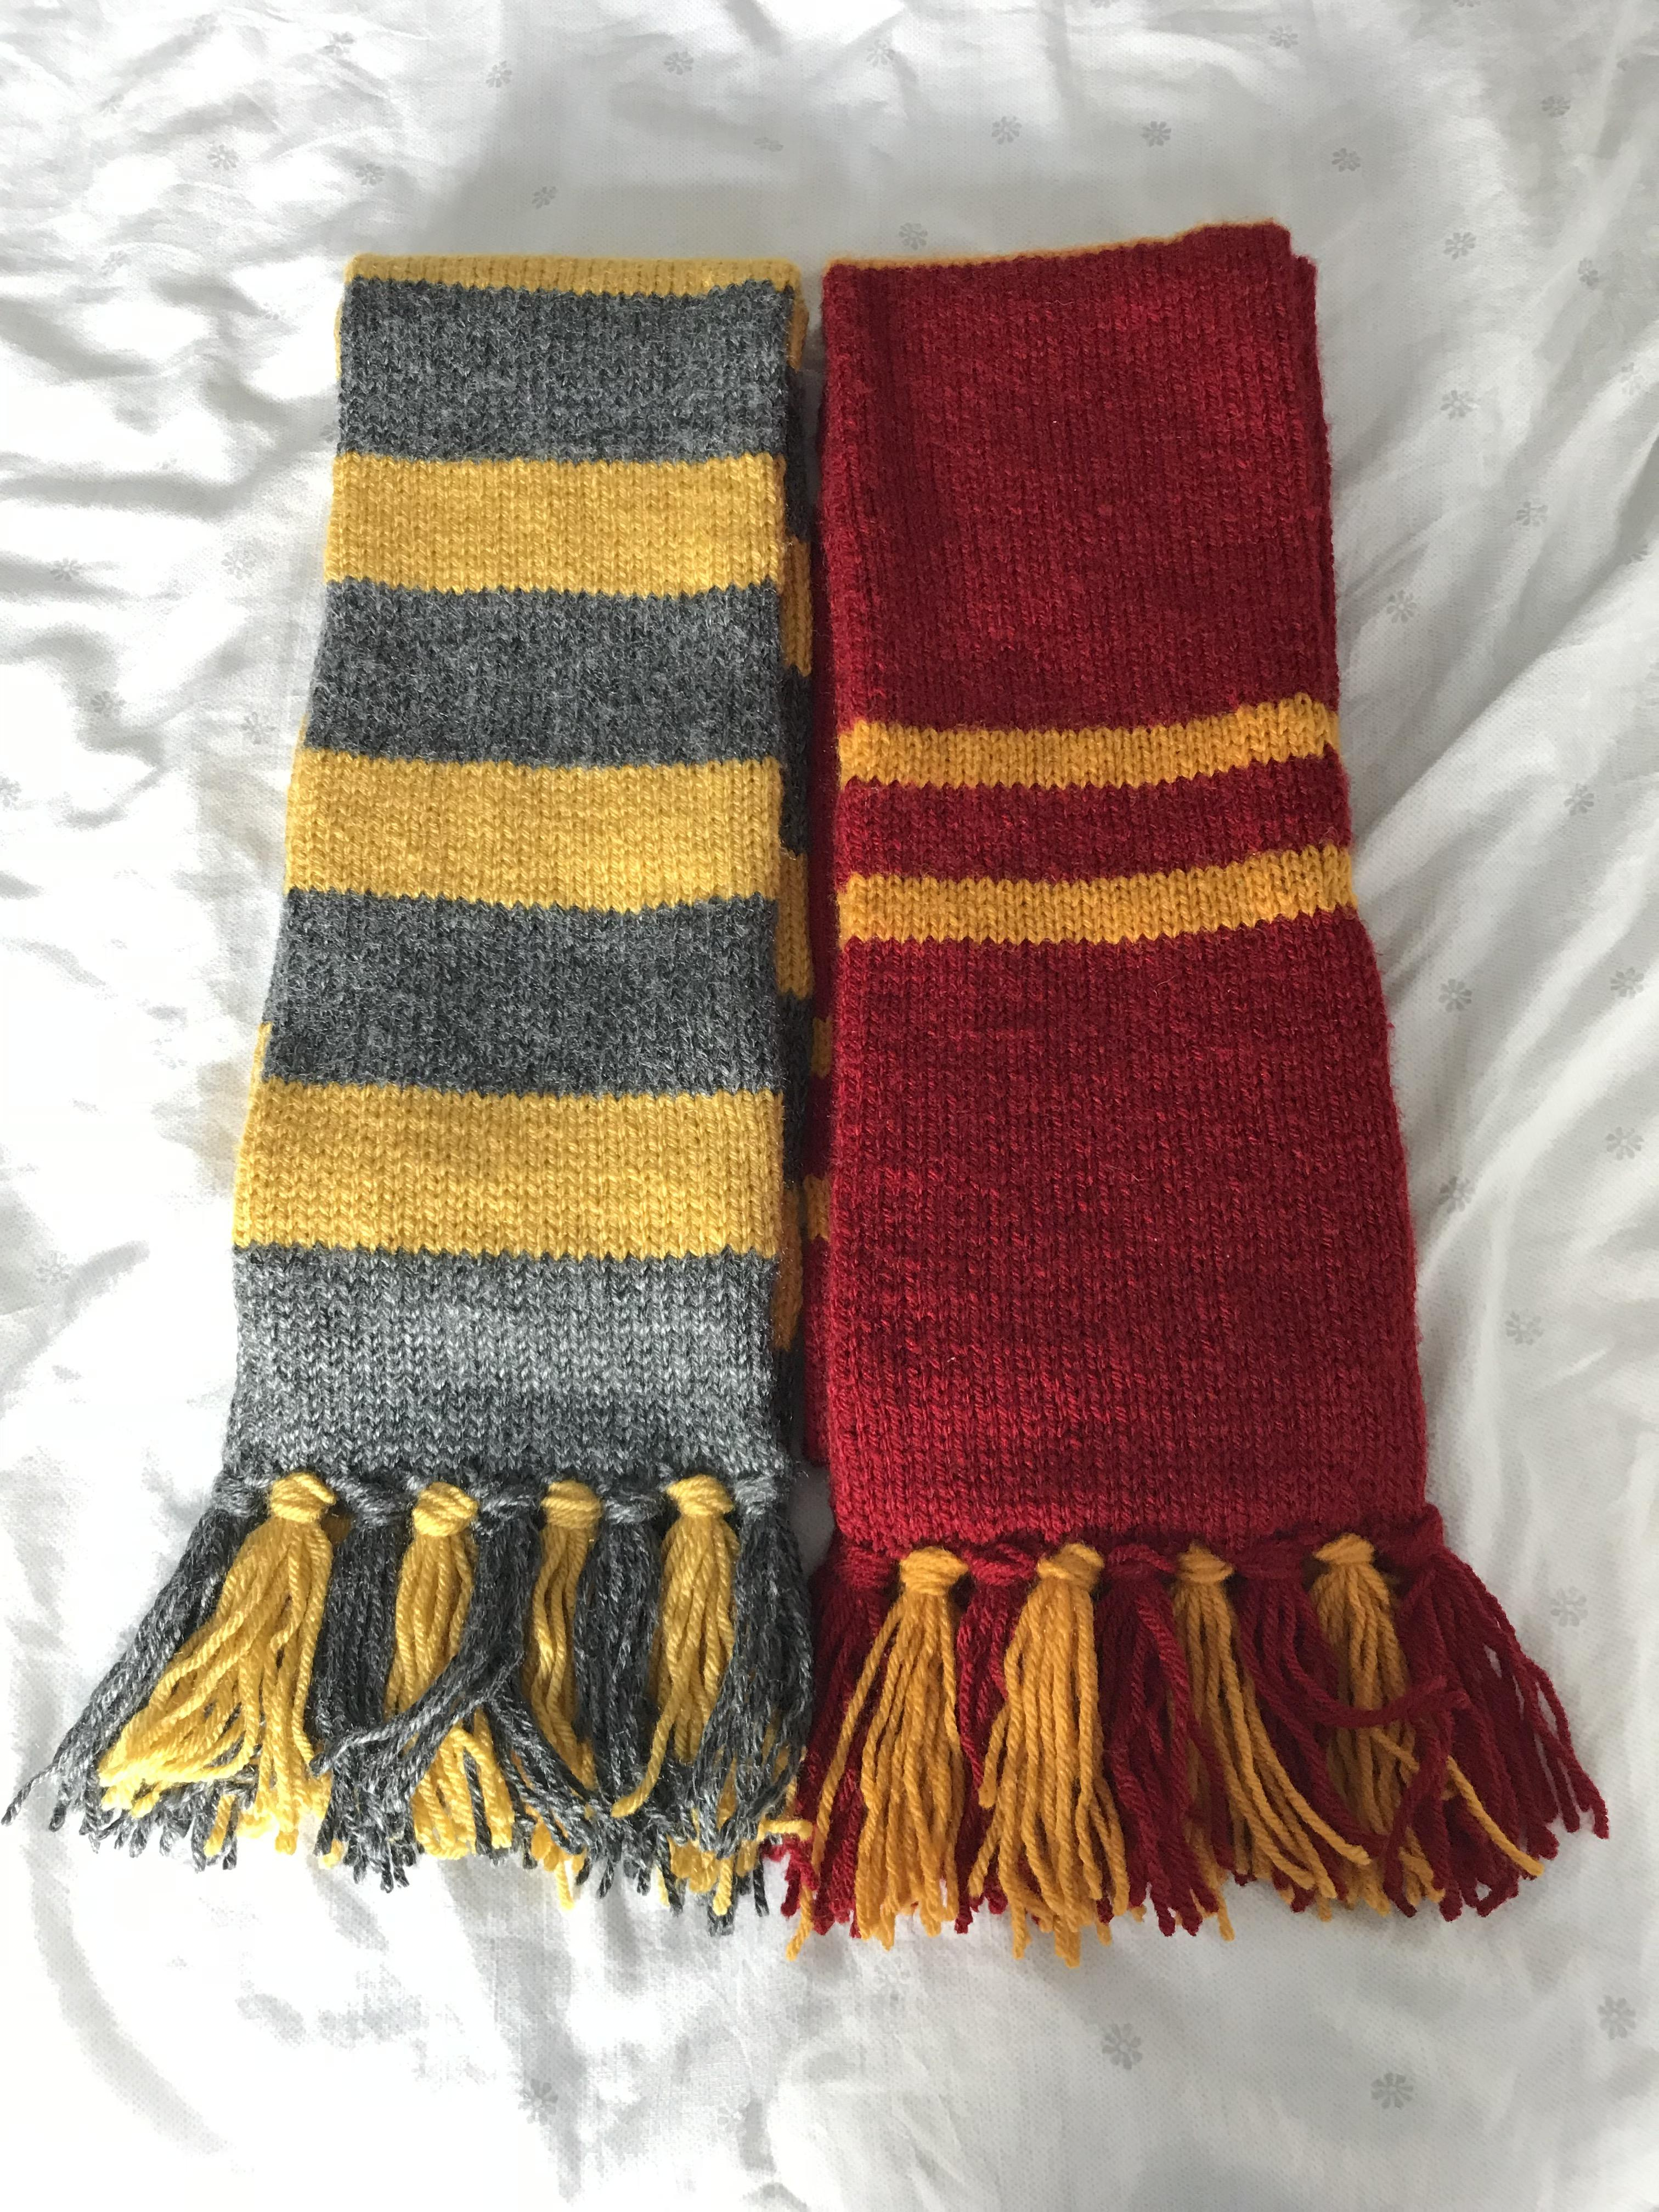 Hogwarts House Scarf Knitting Pattern Hogwarts House Scarves Knitting